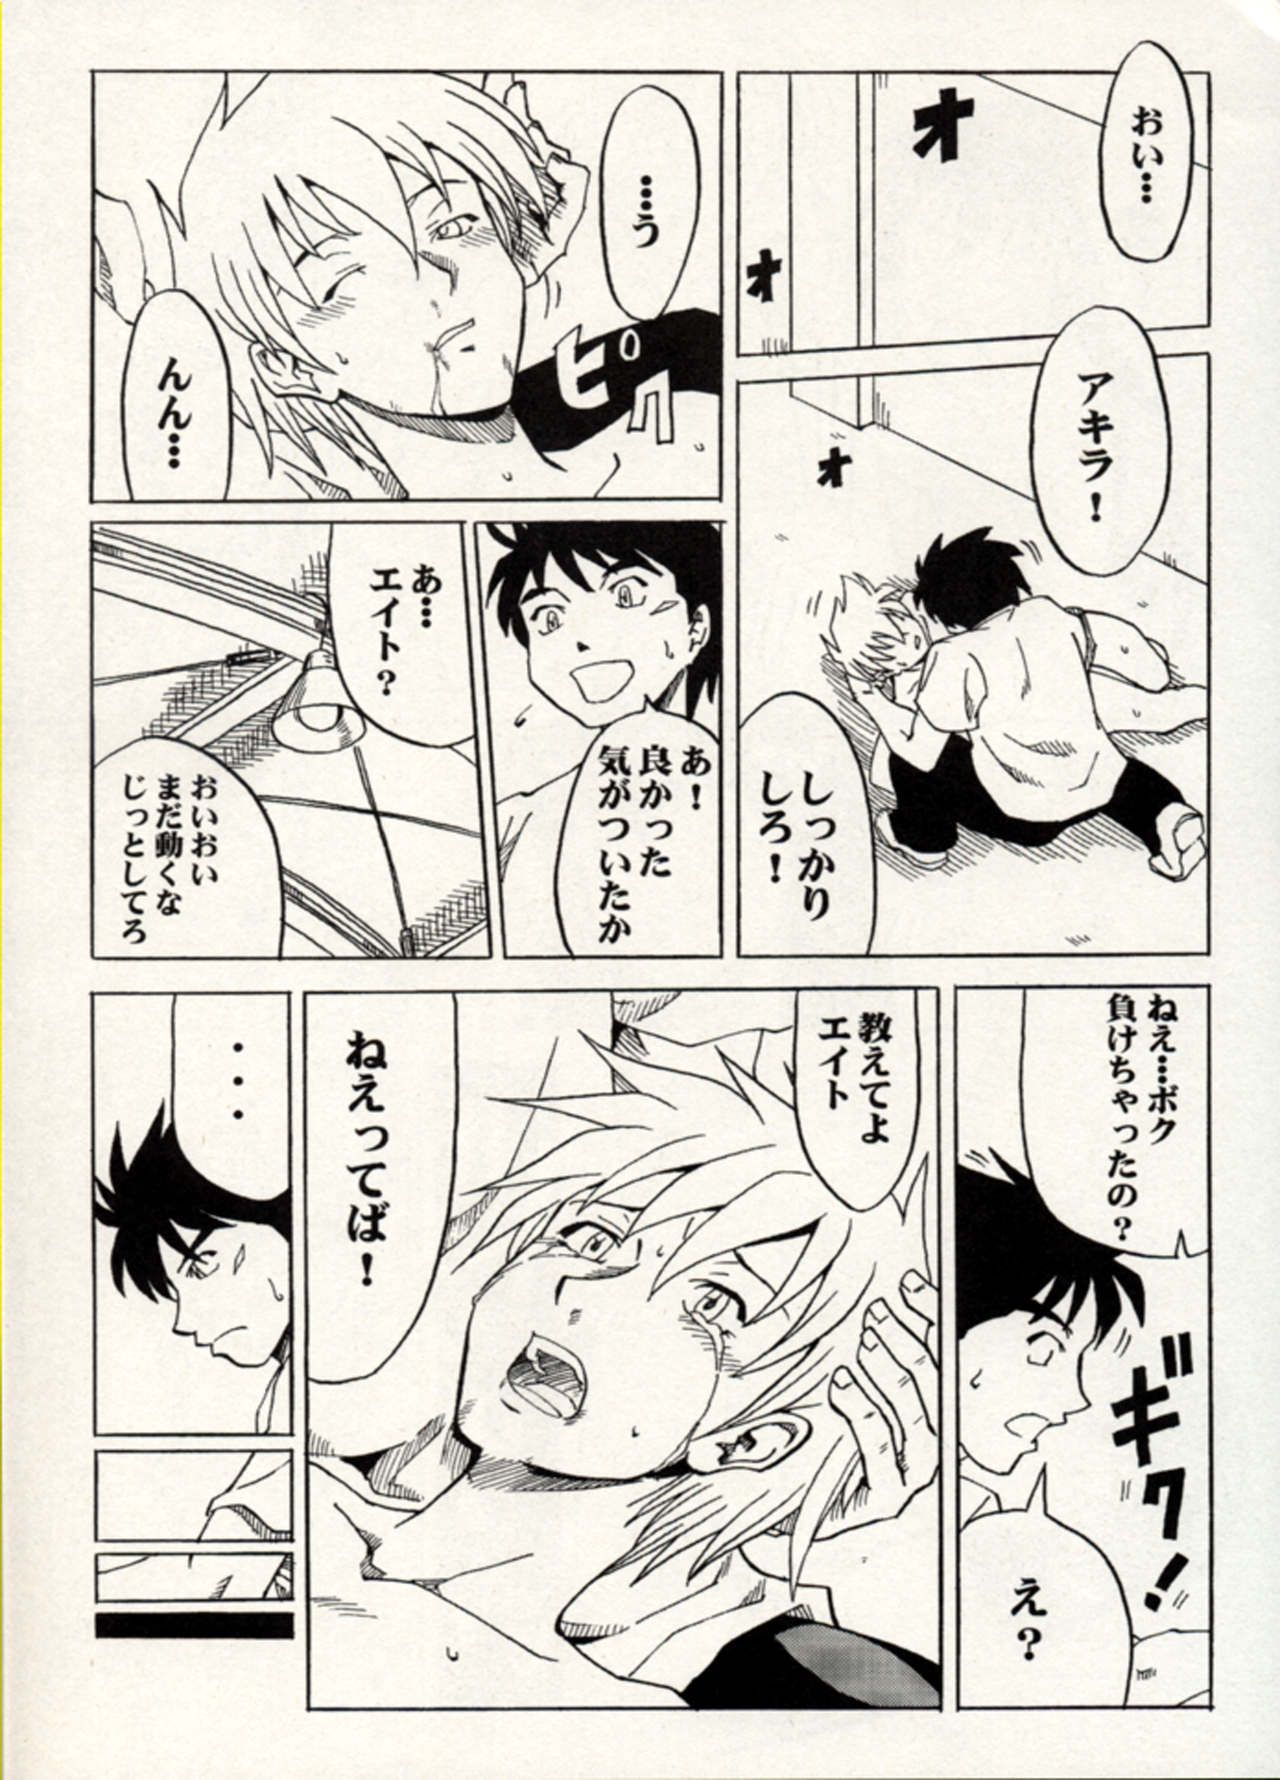 Manga Battle Volume 15 51